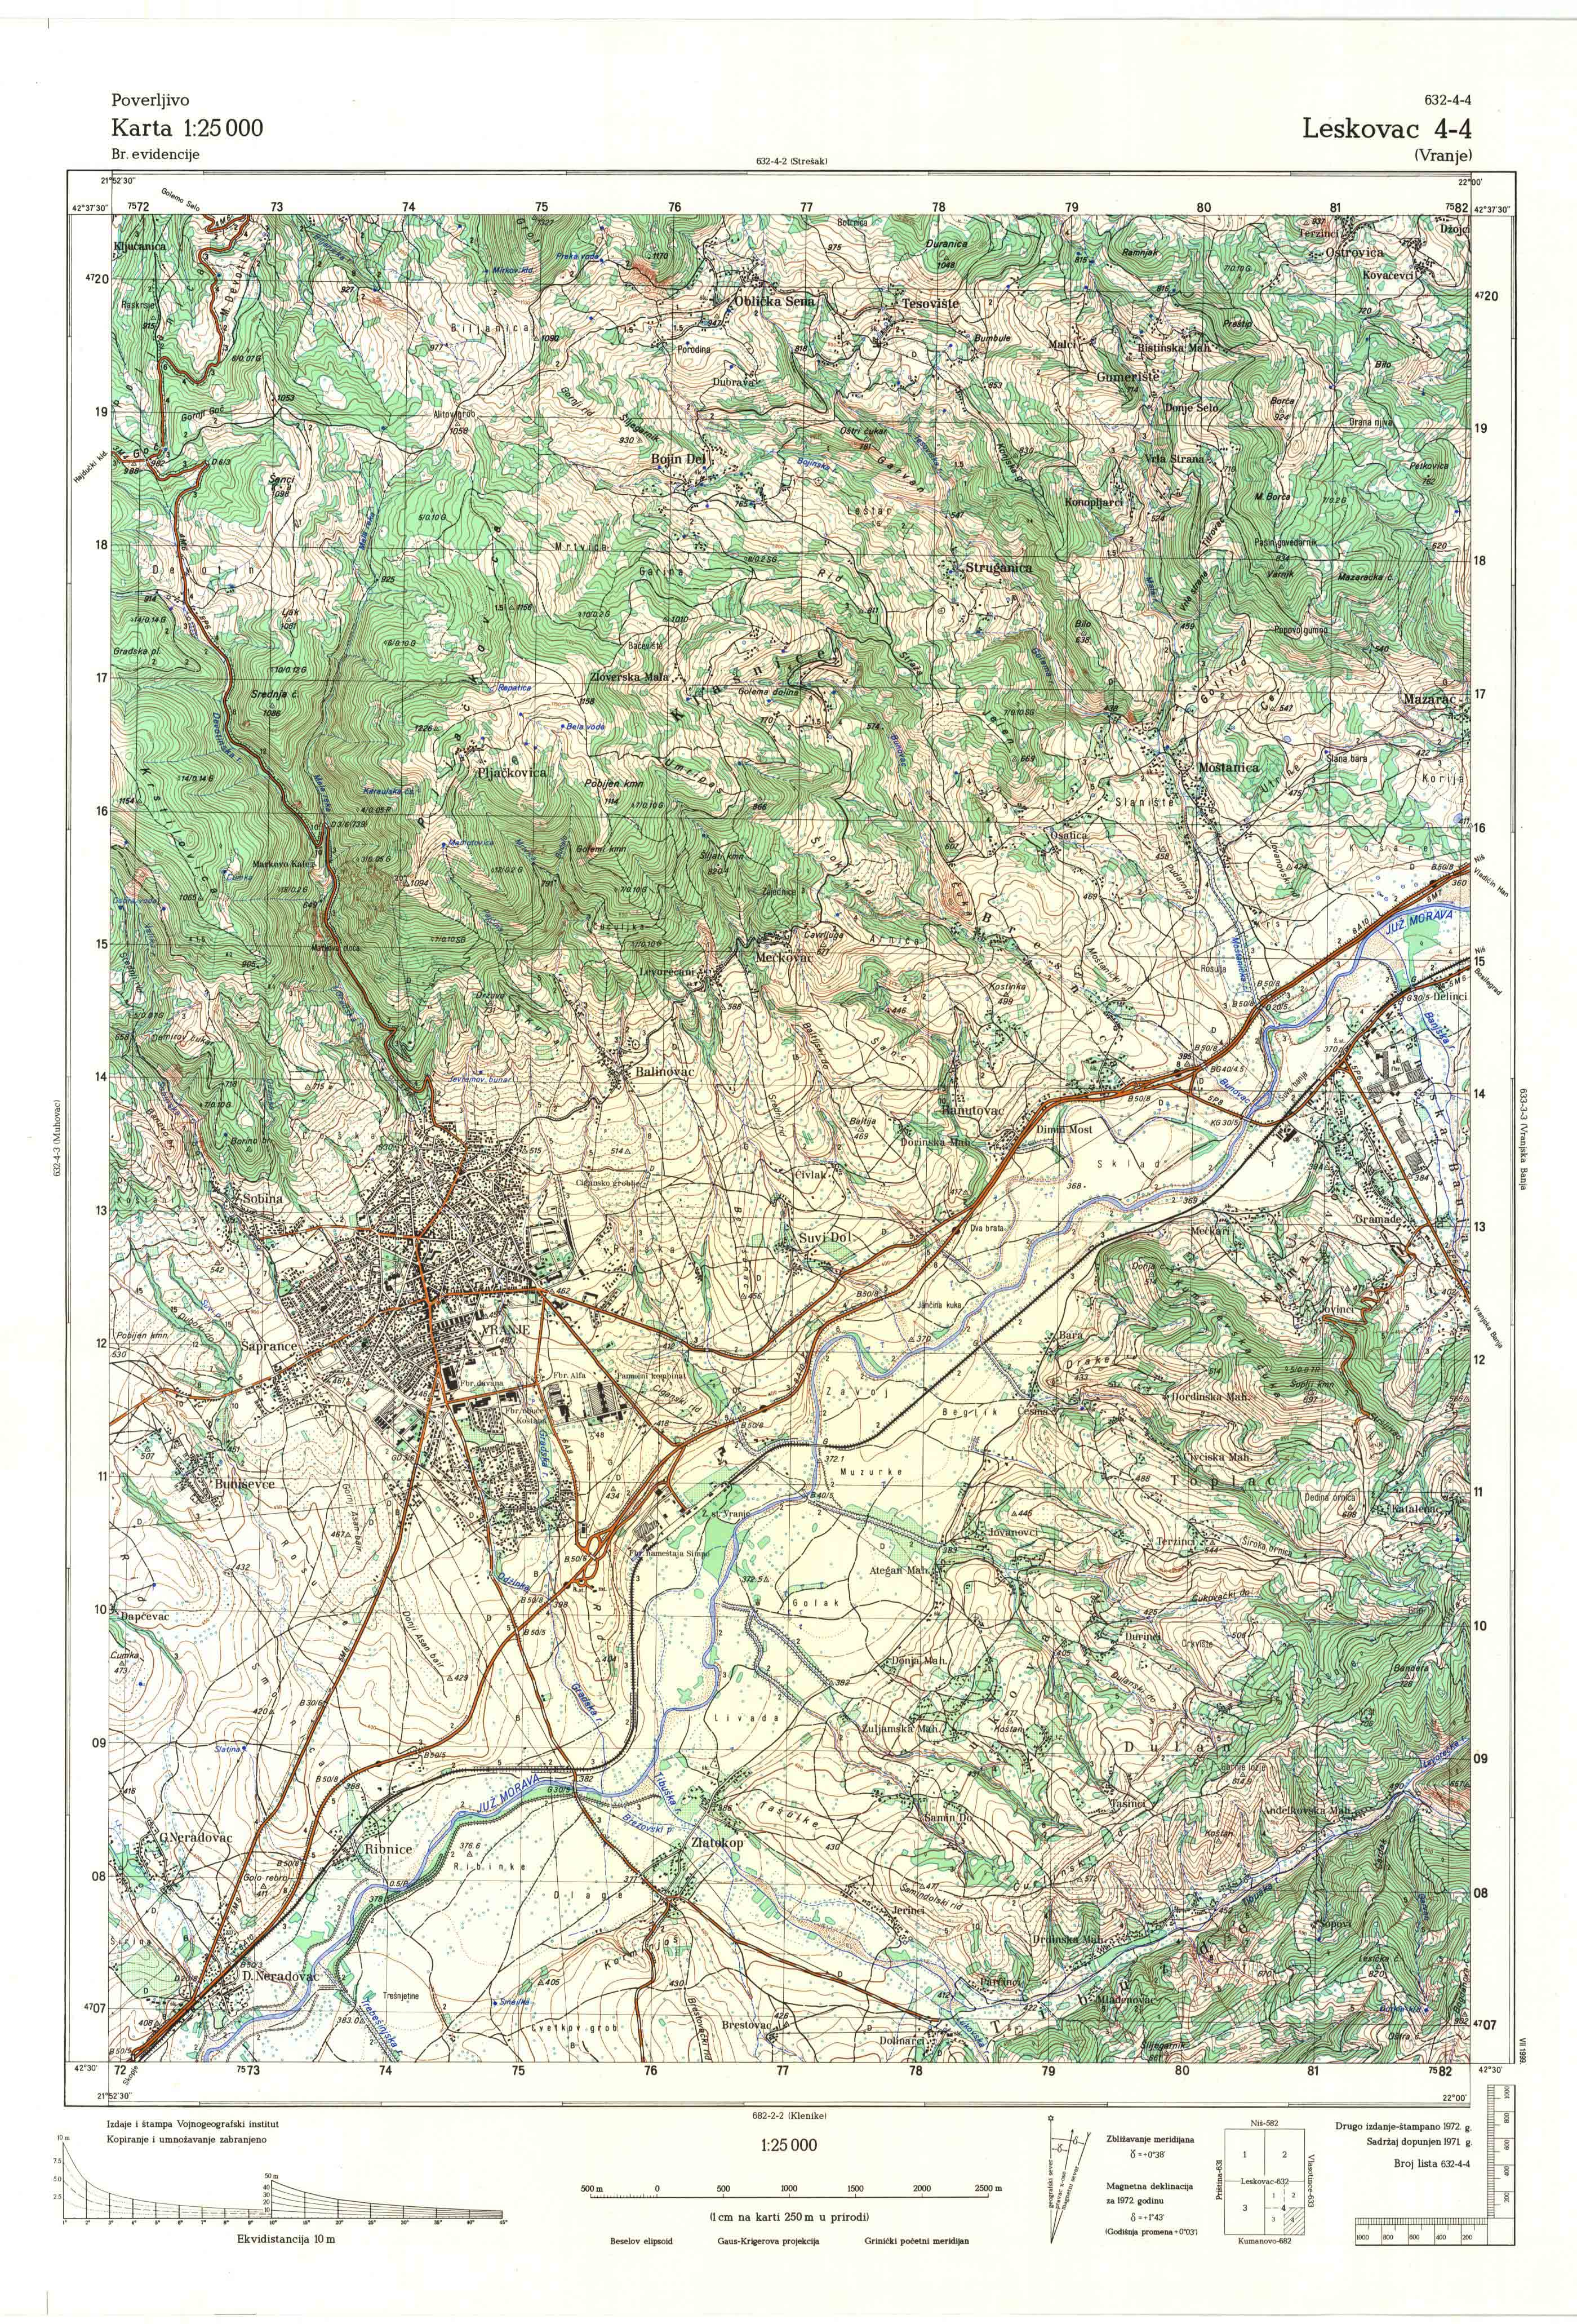  topografska karta srbije 25000 JNA  Leskovac